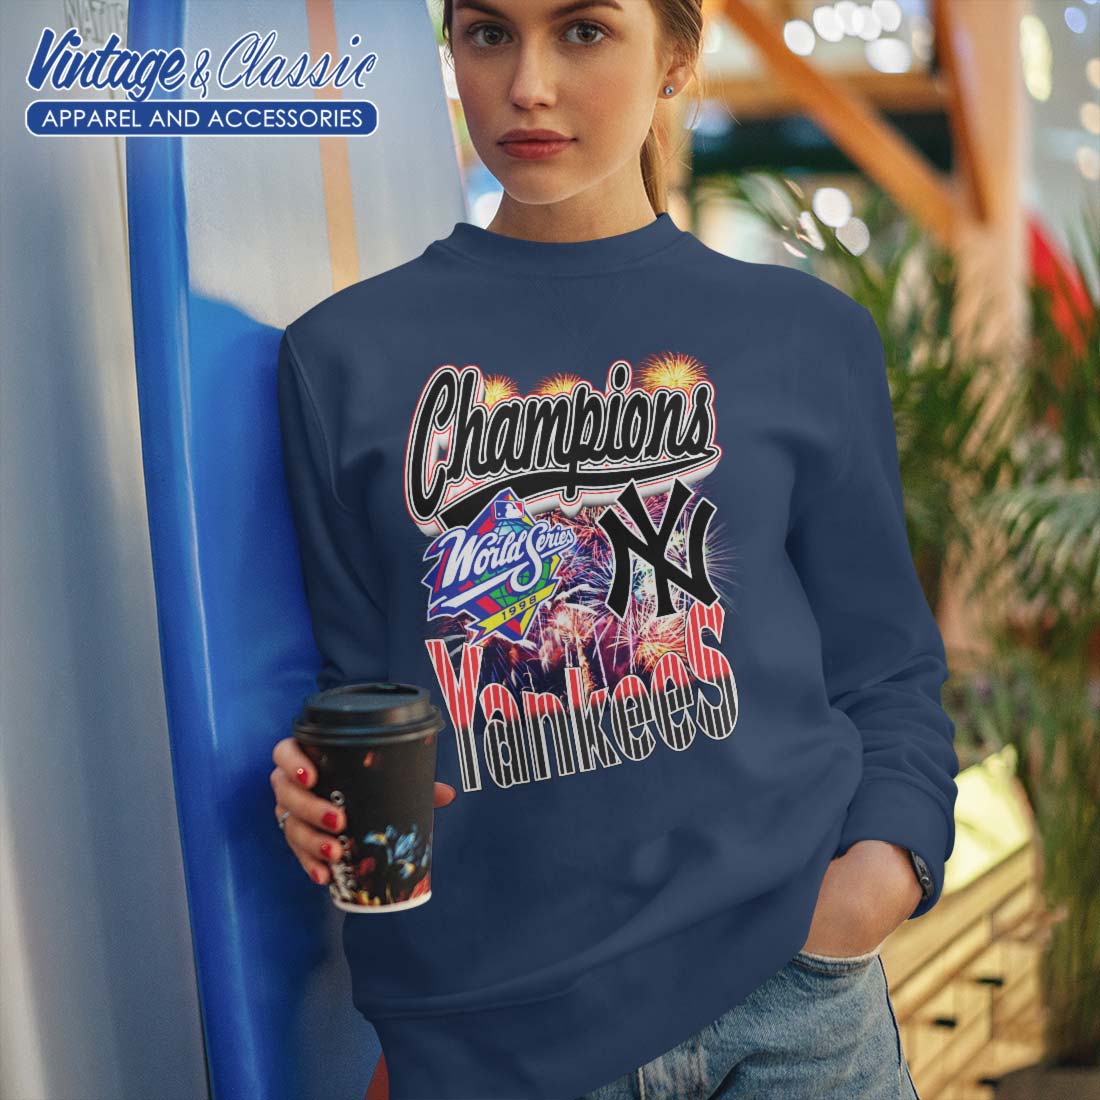 New York Yankees 1998 World Series Champions Shirt - High-Quality